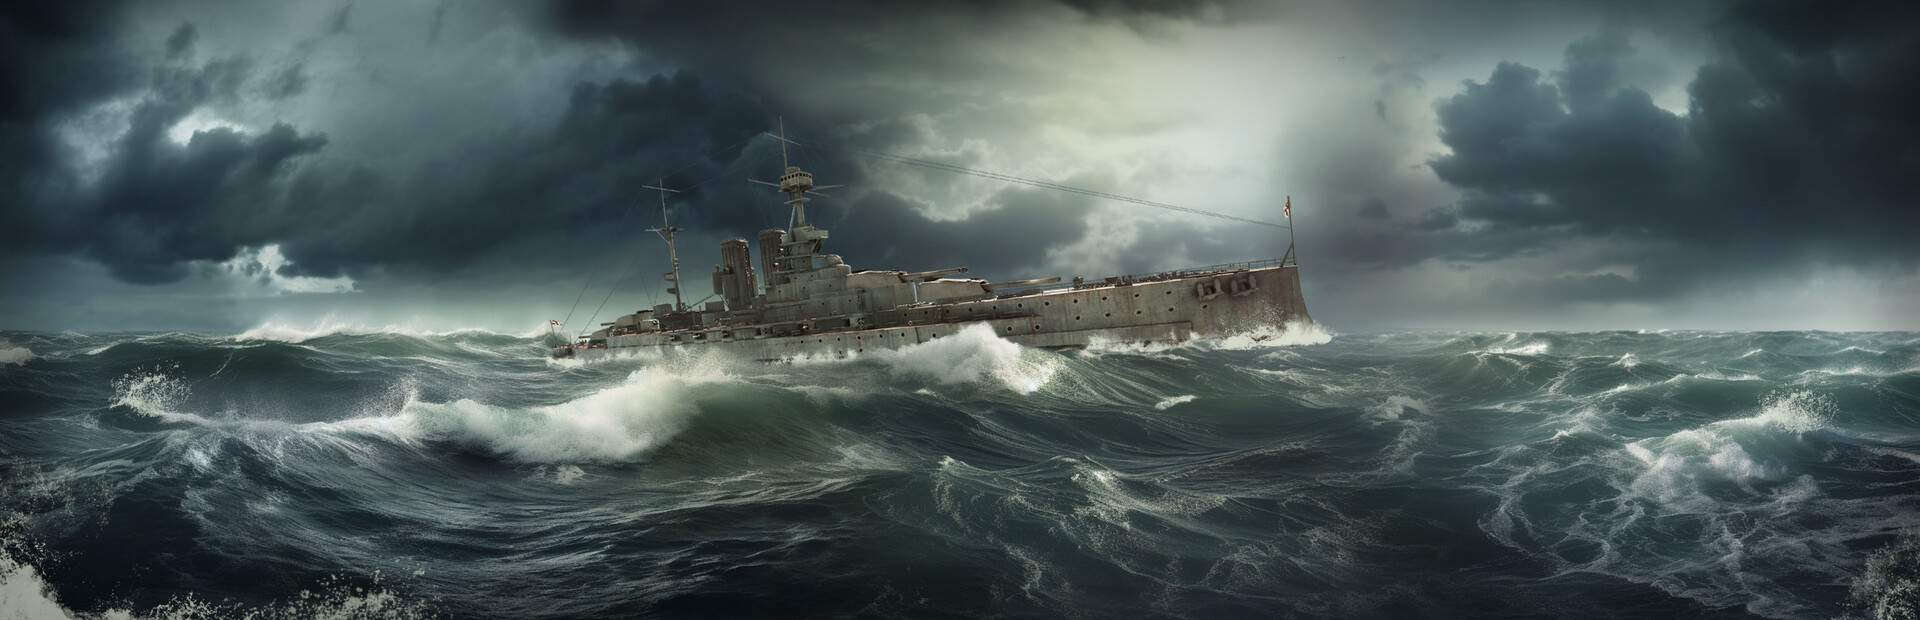 Victory at Sea Atlantic - World War II Naval Warfare cover image